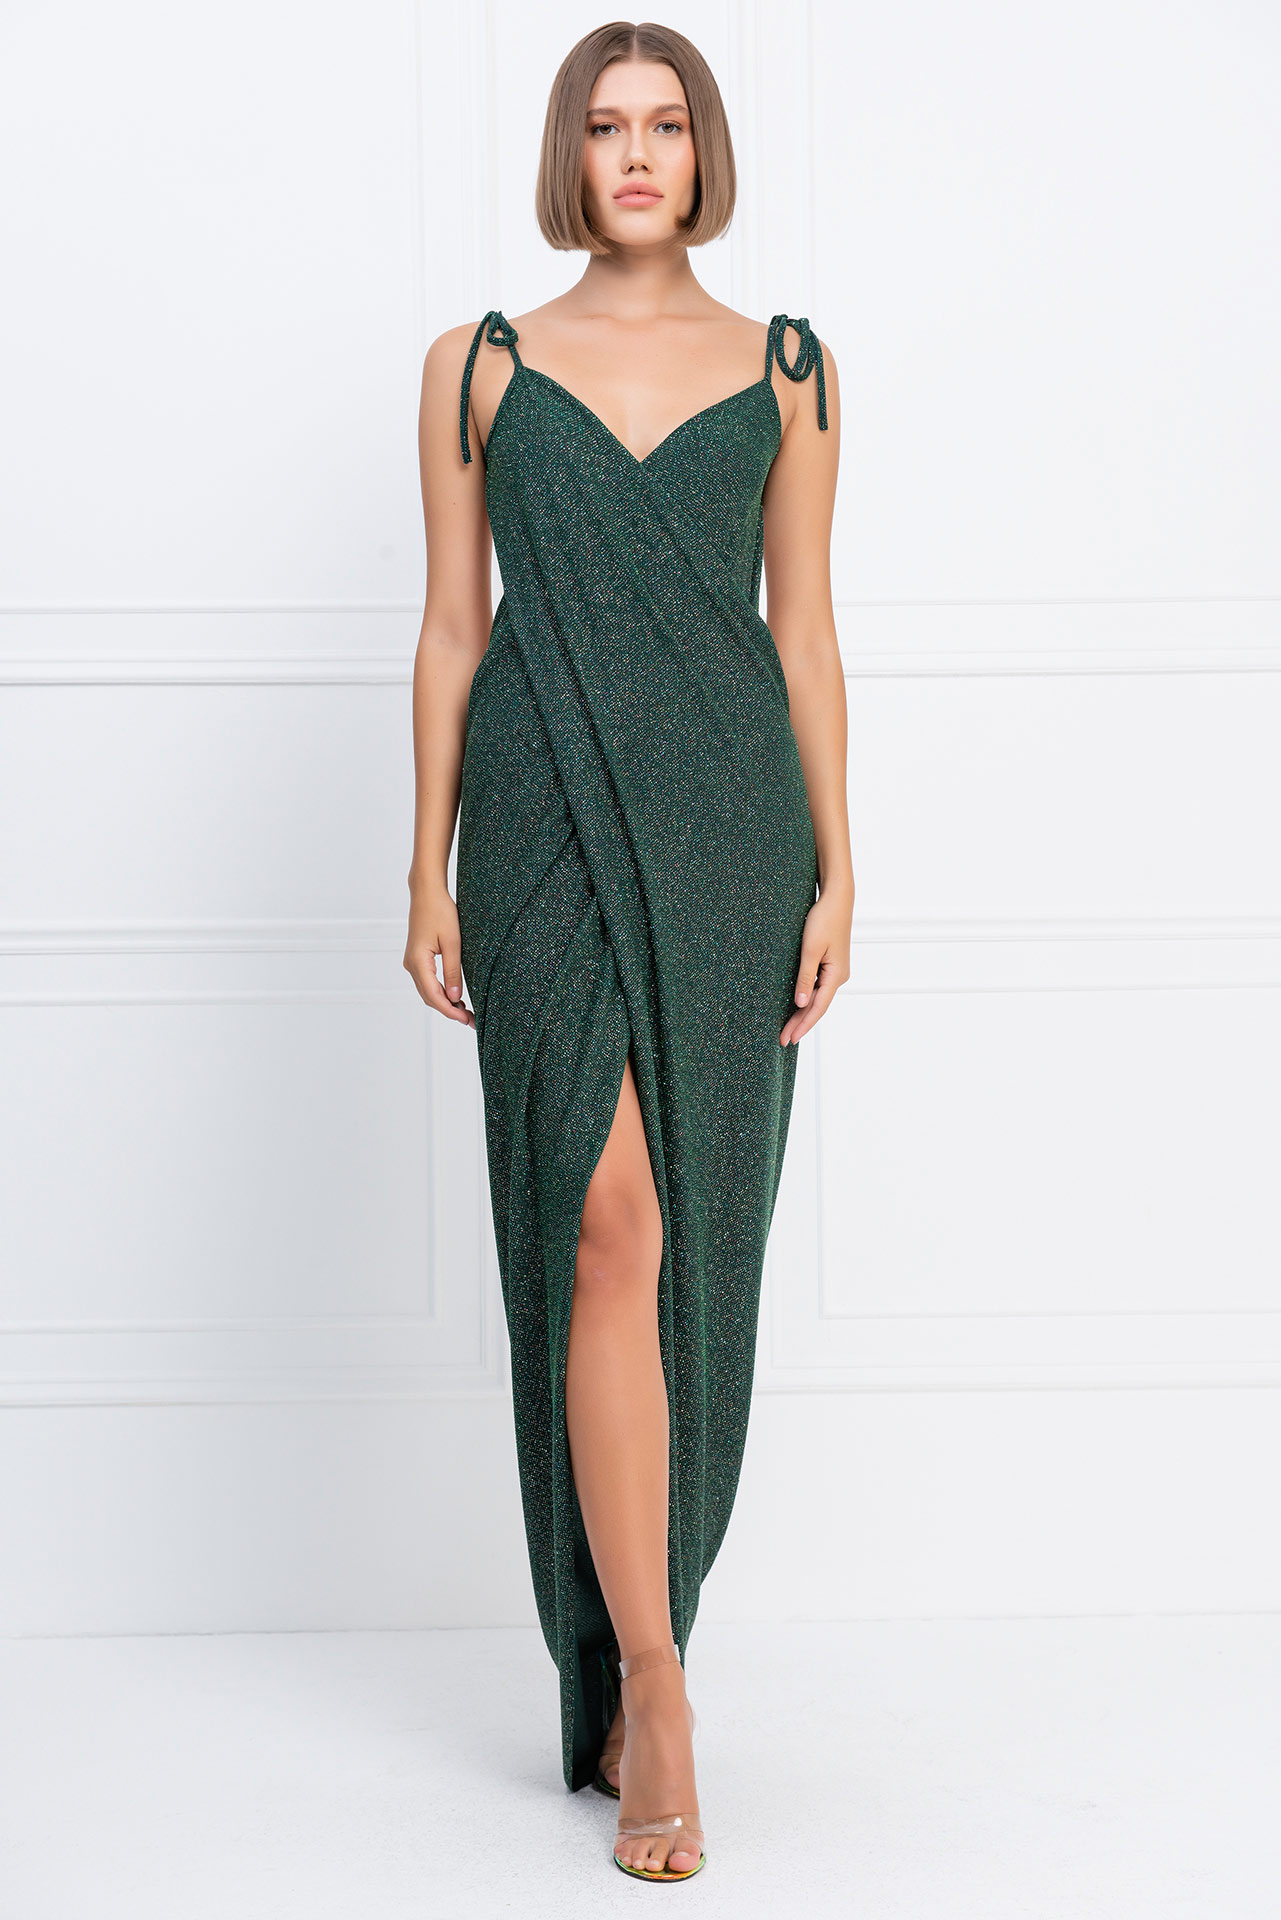 Glittery Dark Green Crossover Cami Dress